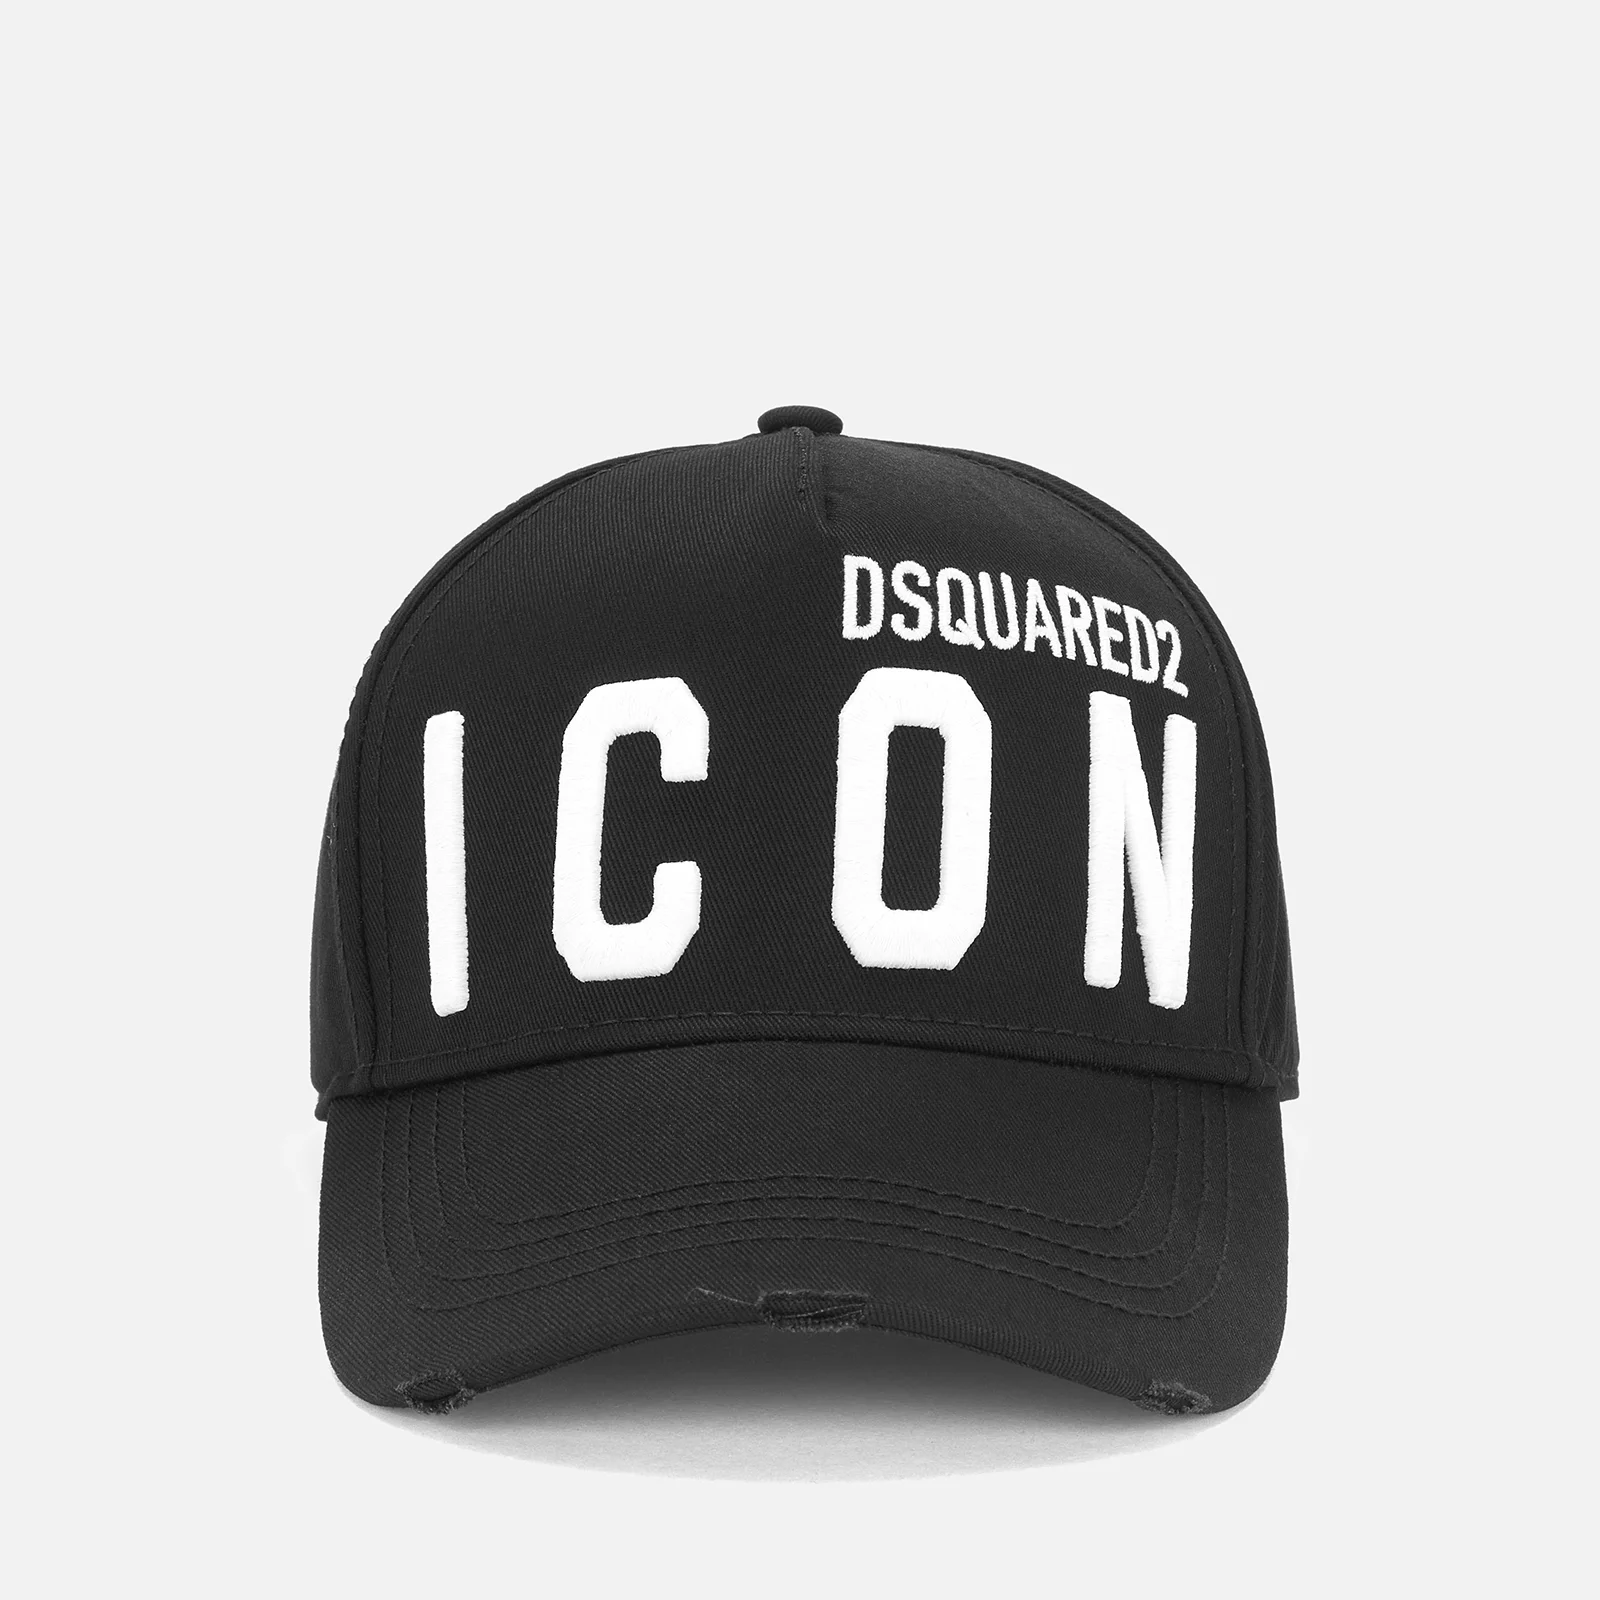 Dsquared2 Men's D2 Icon Baseball Cap - Black/White Image 1